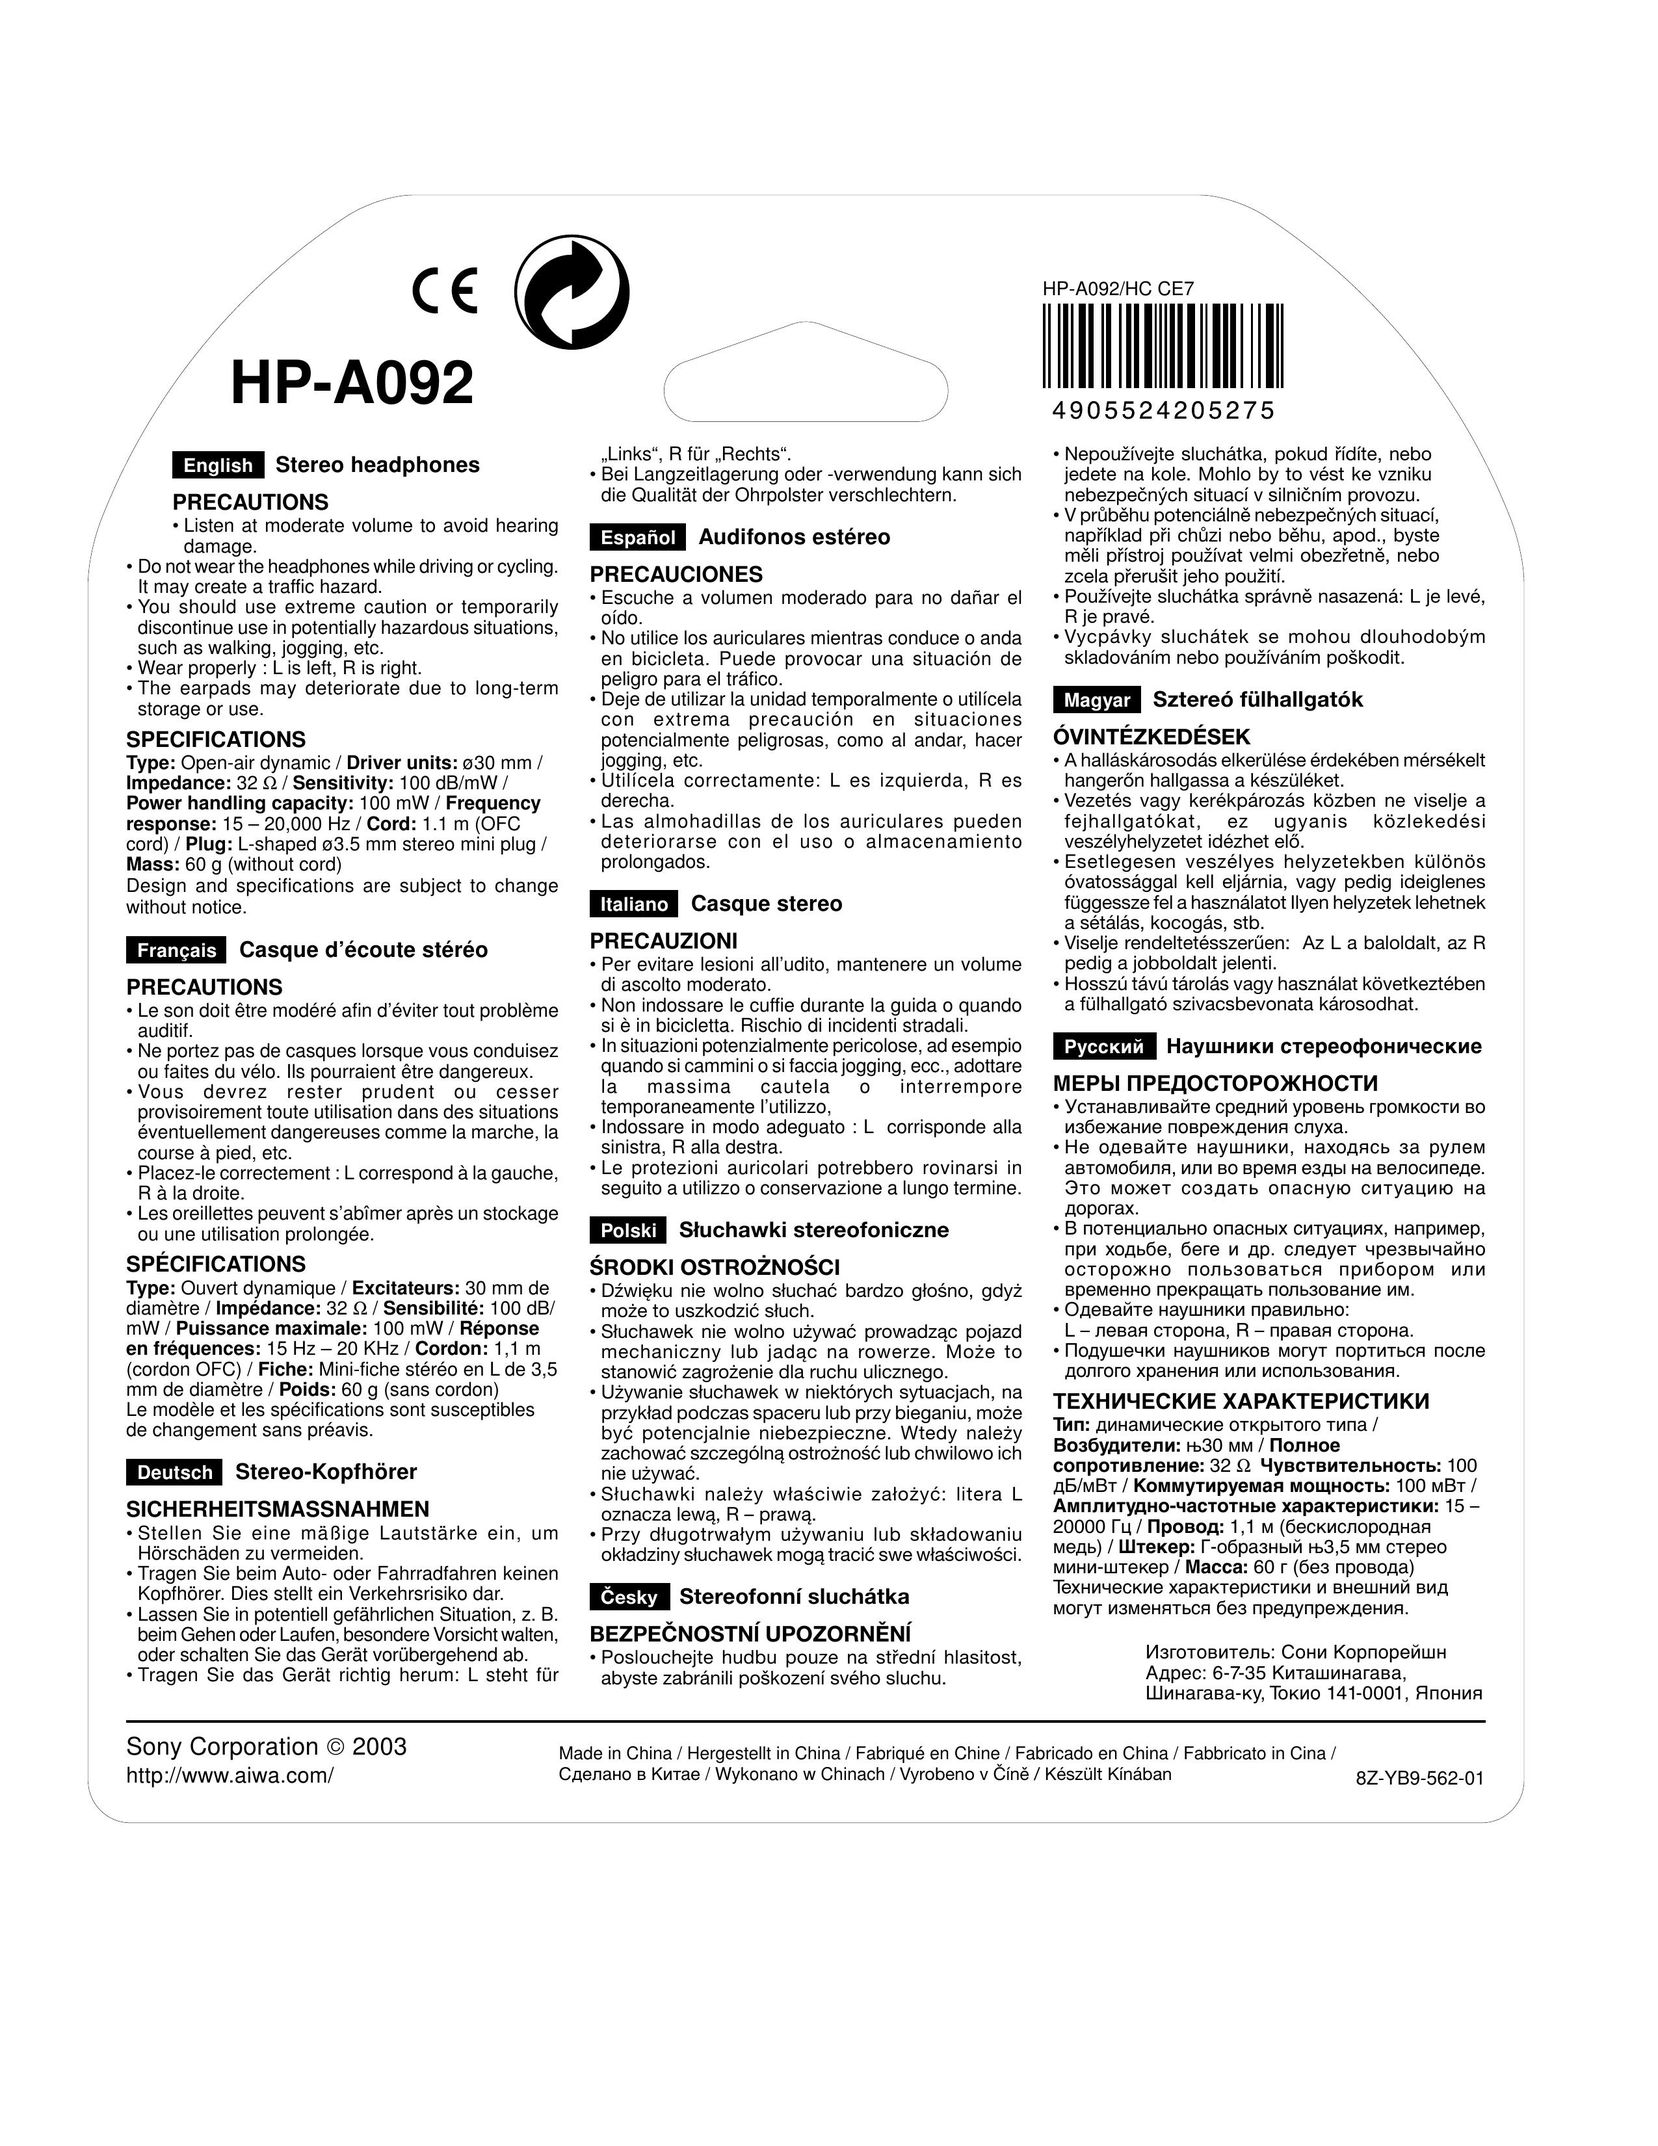 Aiwa HP-A092 Headphones User Manual